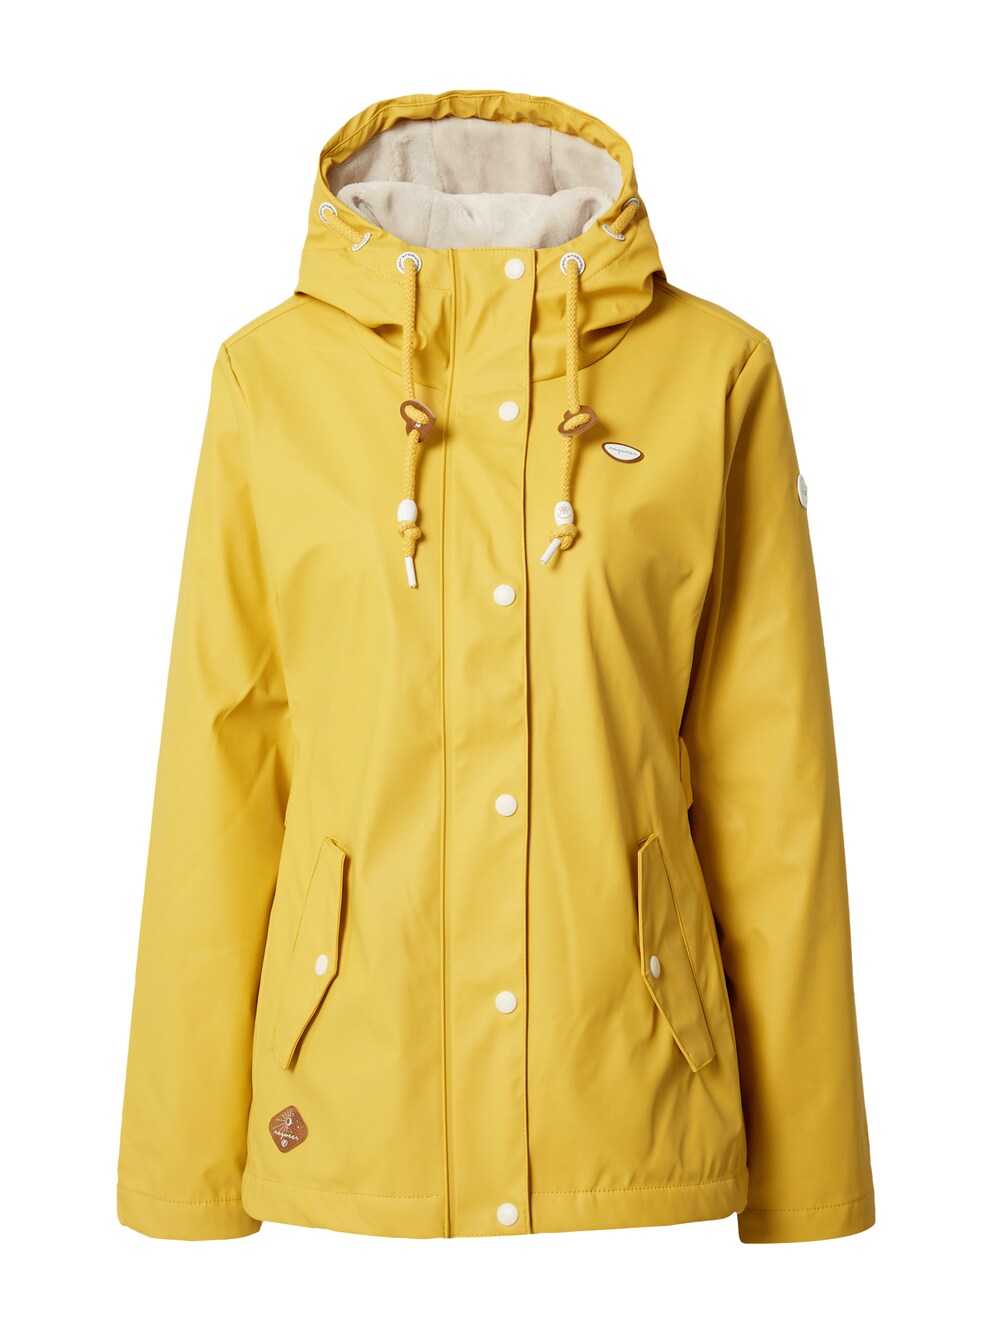 Межсезонная куртка Ragwear MARGGE, желтый межсезонная куртка ragwear margge оливковый